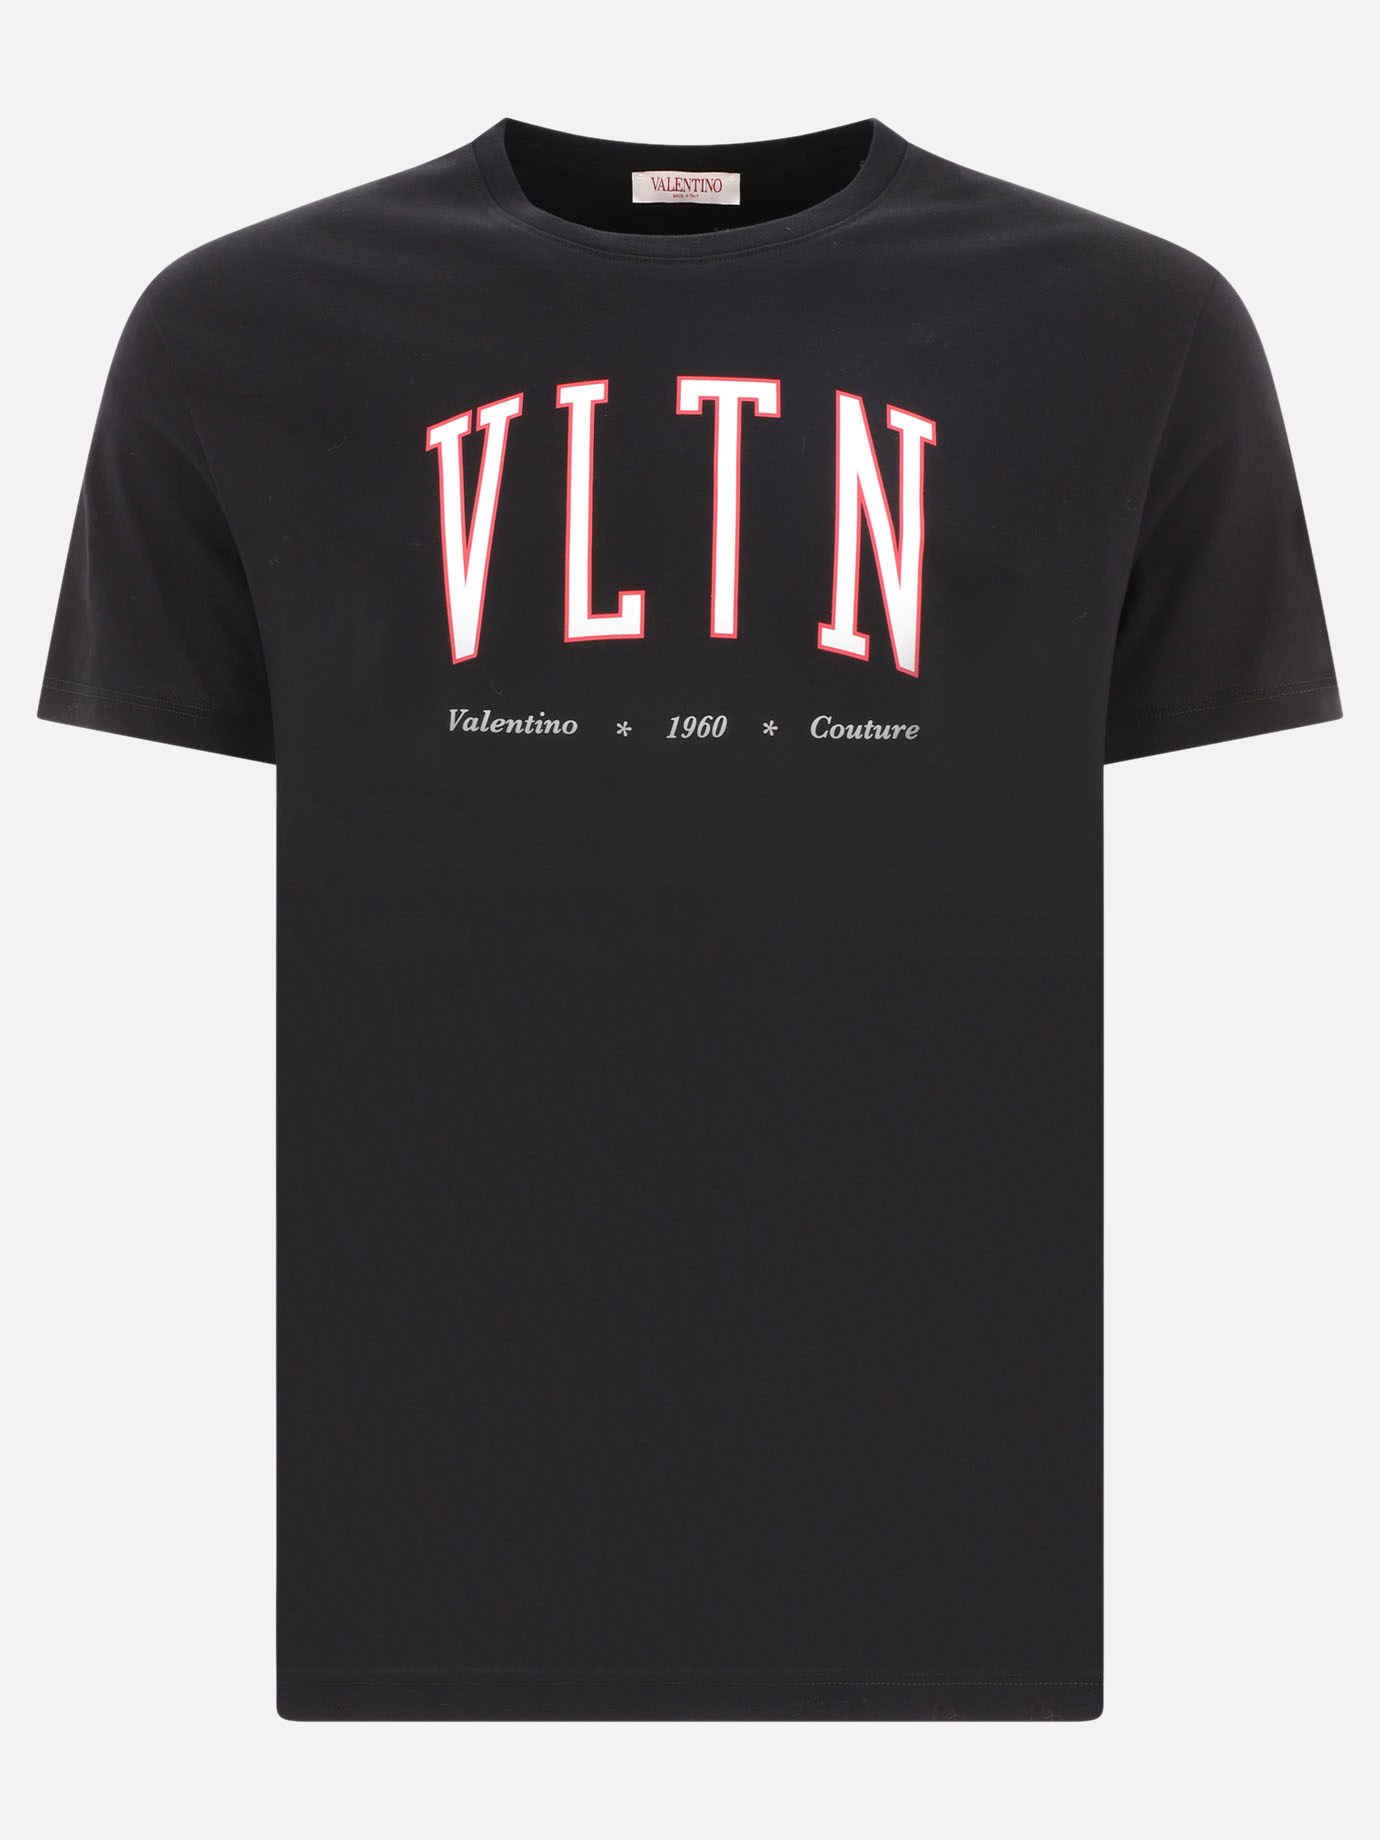 T-shirt  VLTN by Valentino - 0